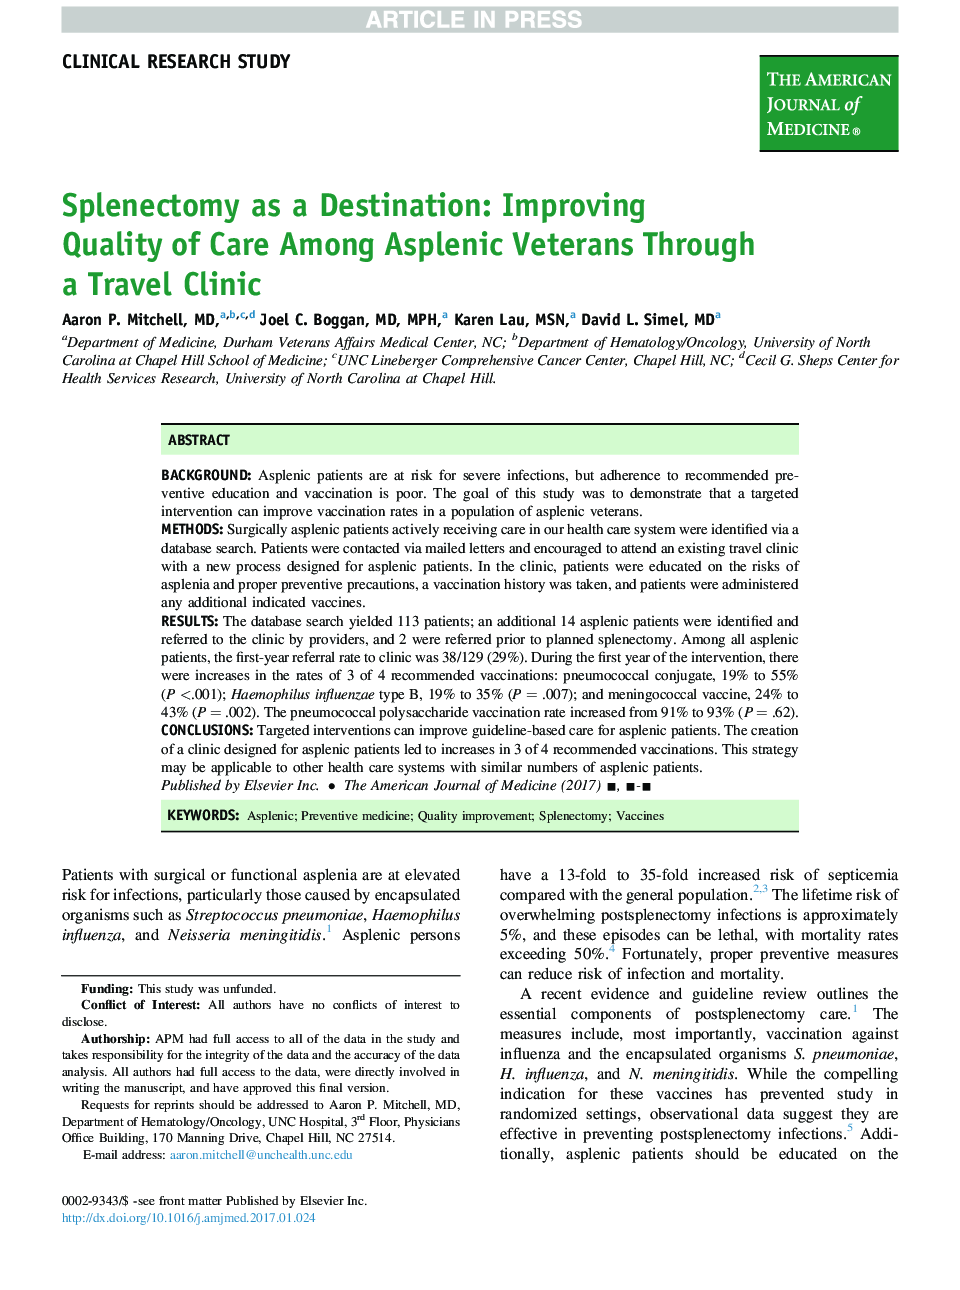 Splenectomy as a Destination: Improving Quality of Care Among Asplenic Veterans Through a Travel Clinic